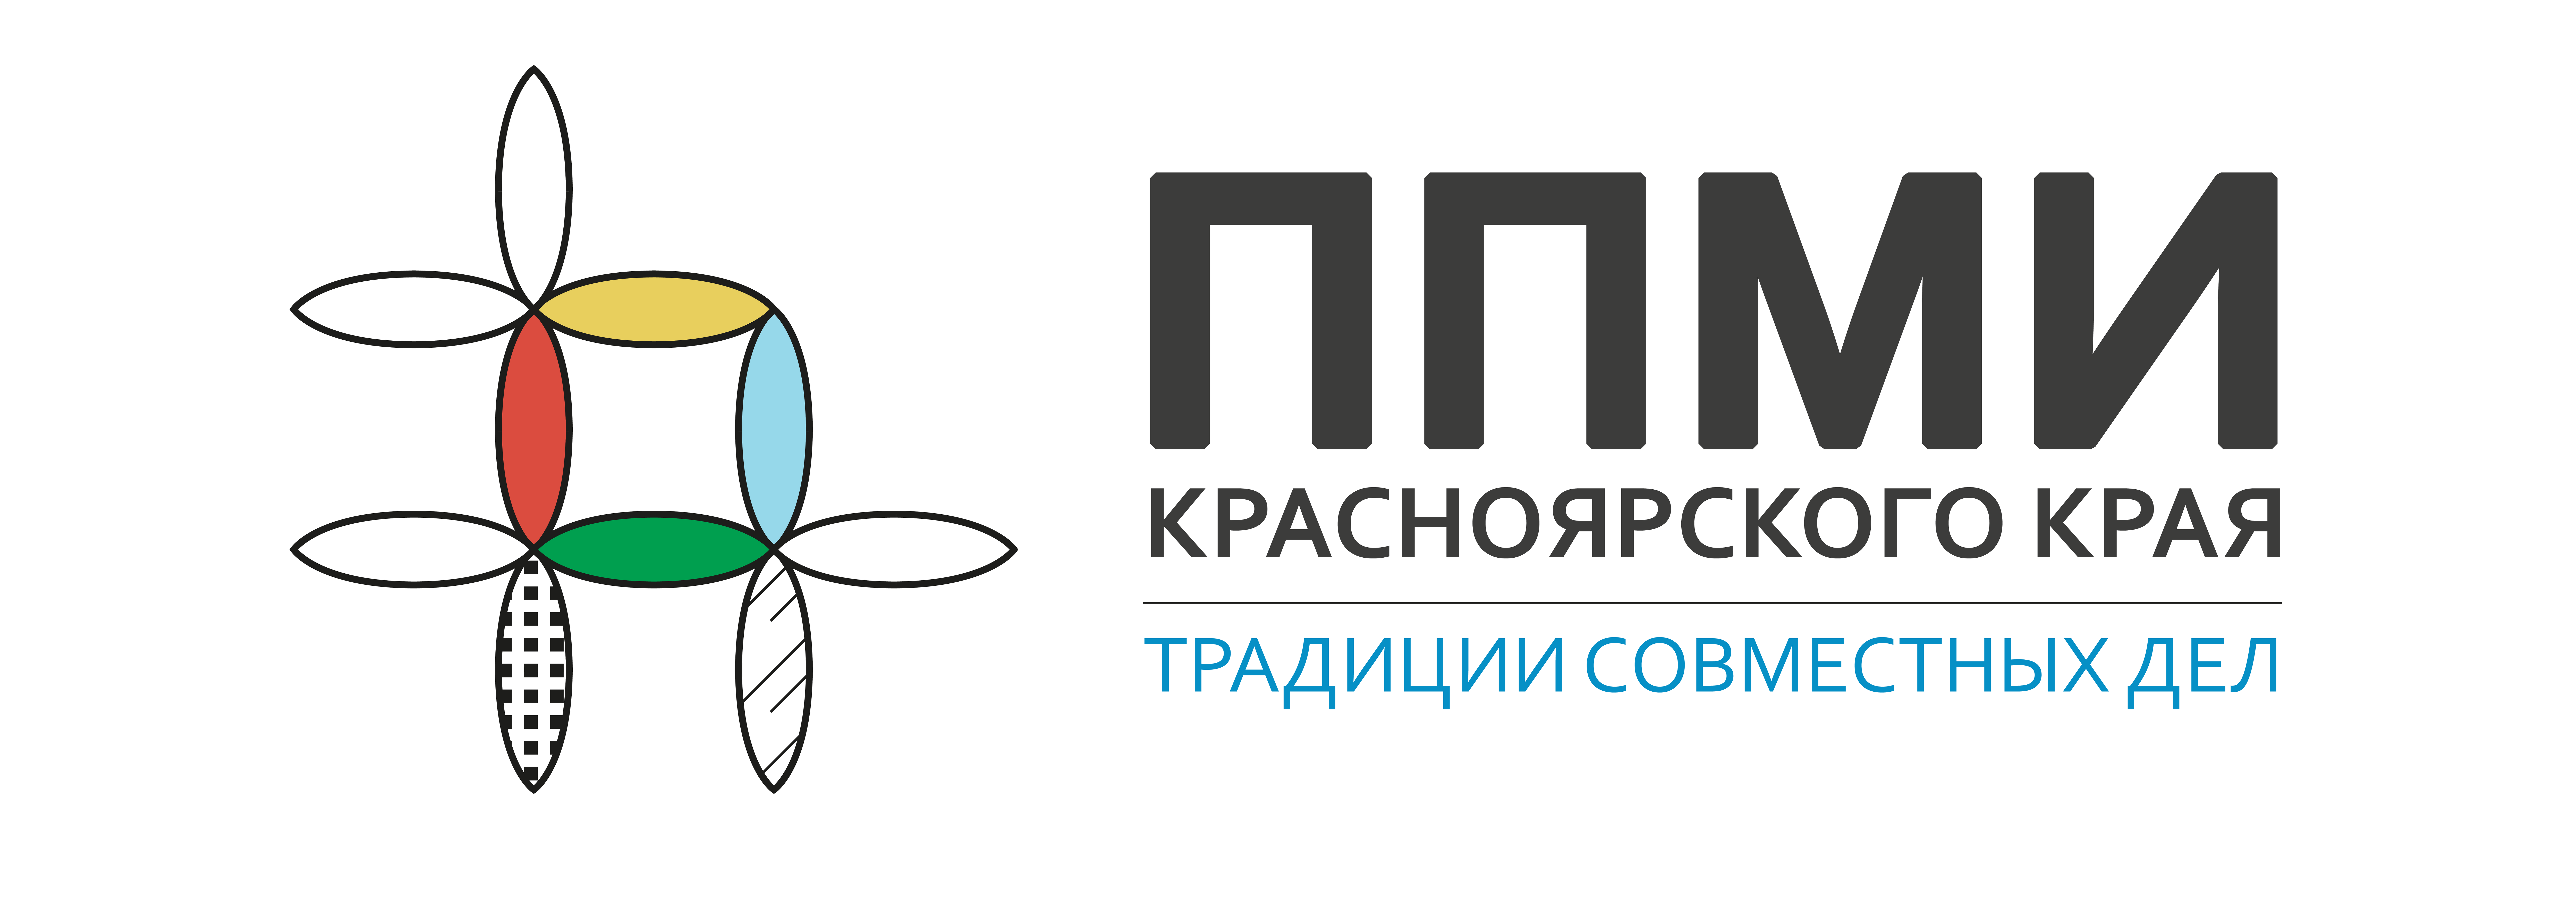 Логотип ППМИ 2020